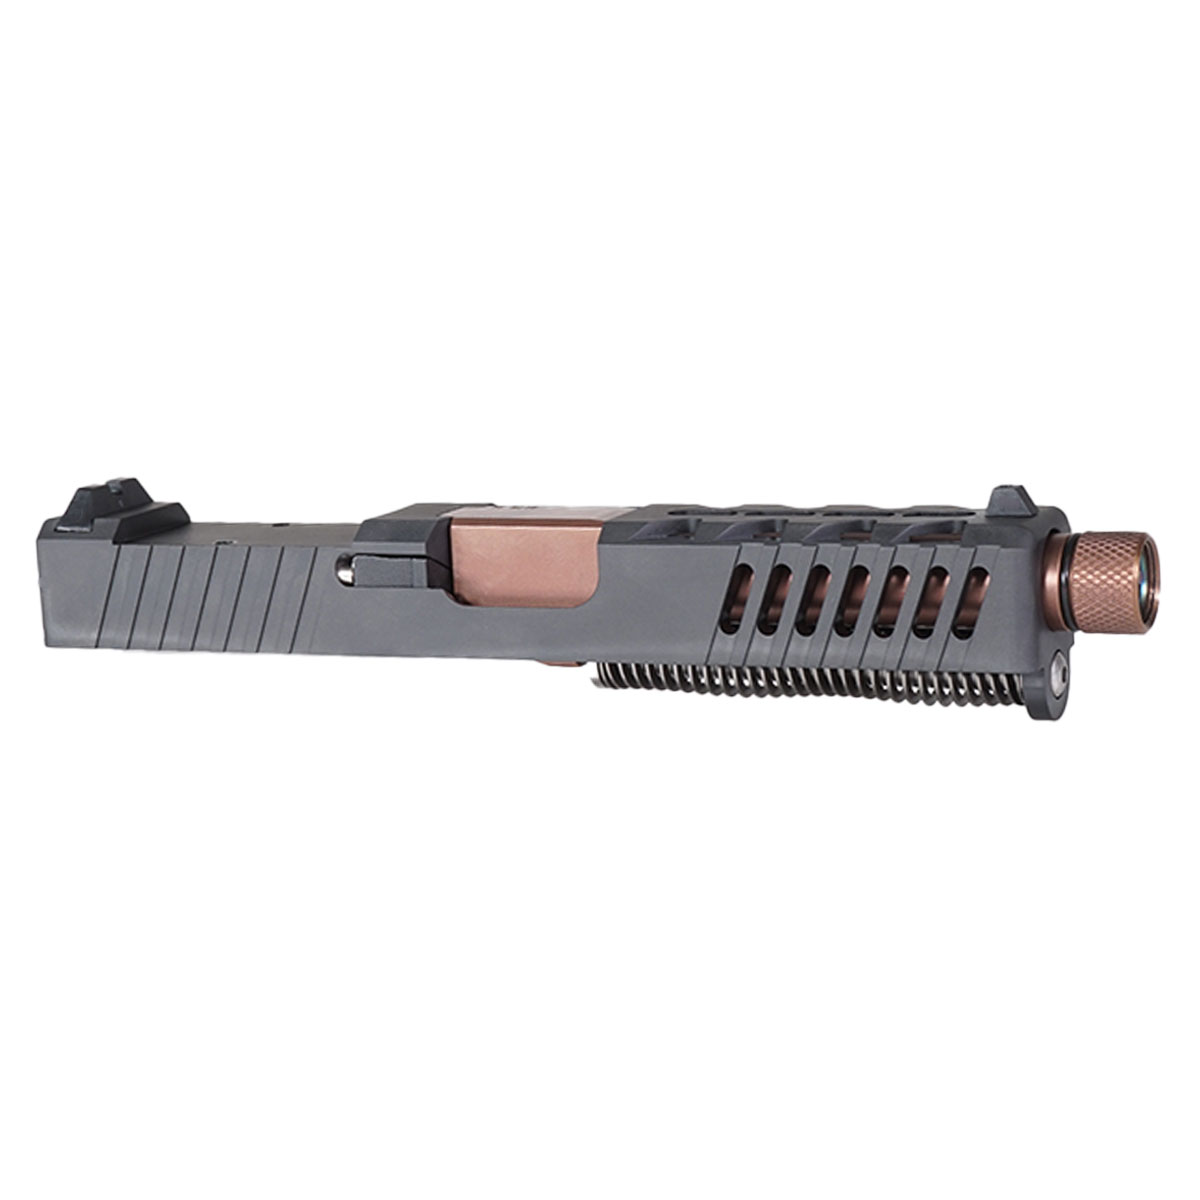 DTT 'Plinkerton' 9mm Complete Slide Kit - Glock 19 Gen 1-3 Compatible